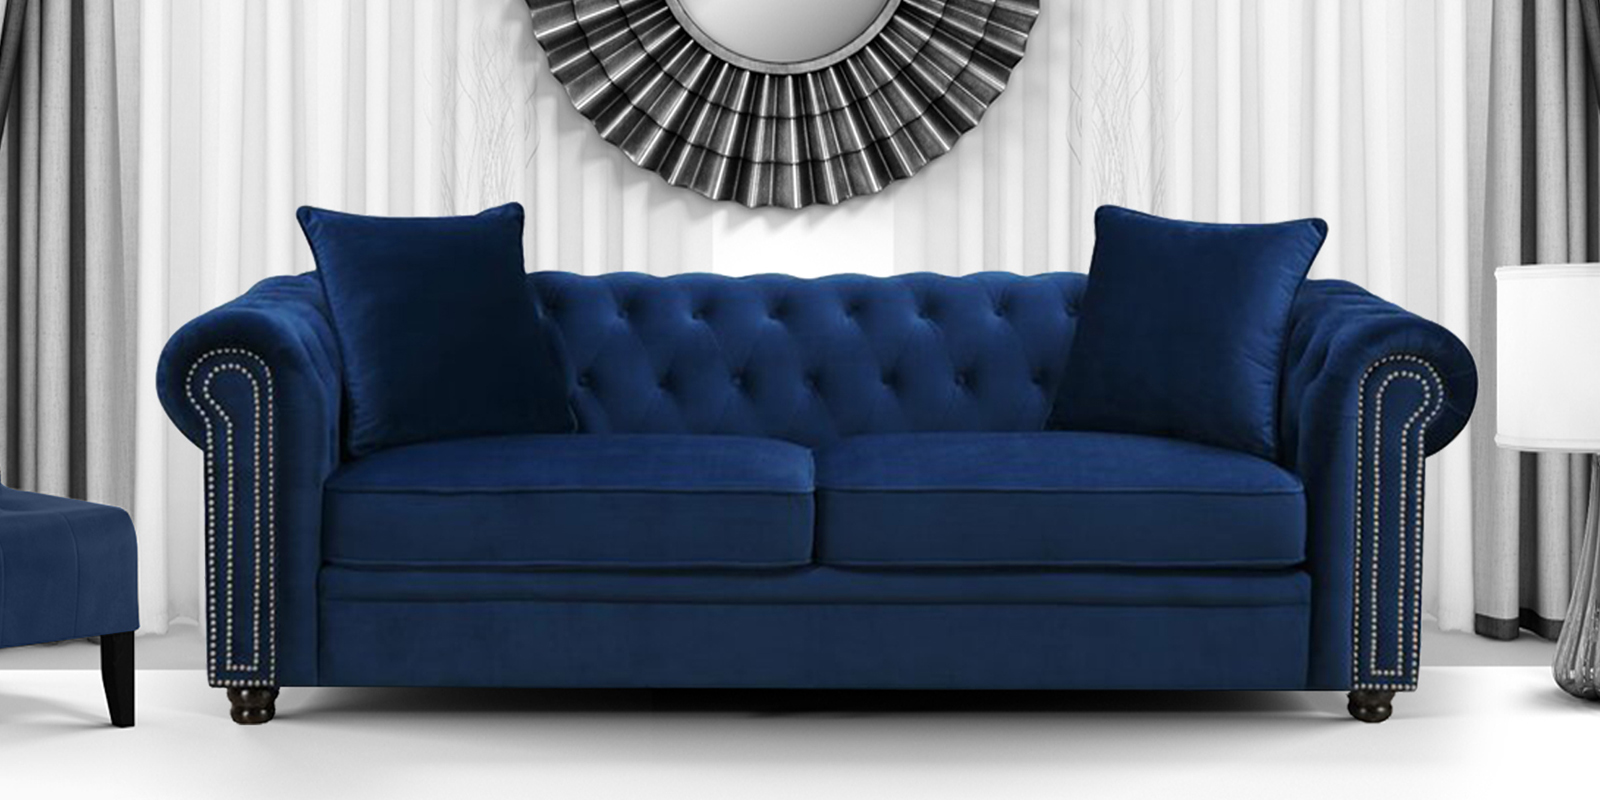 Perceptive 3 Seater Sofa In Navy Blue, Dark Blue Colour Sofa Set